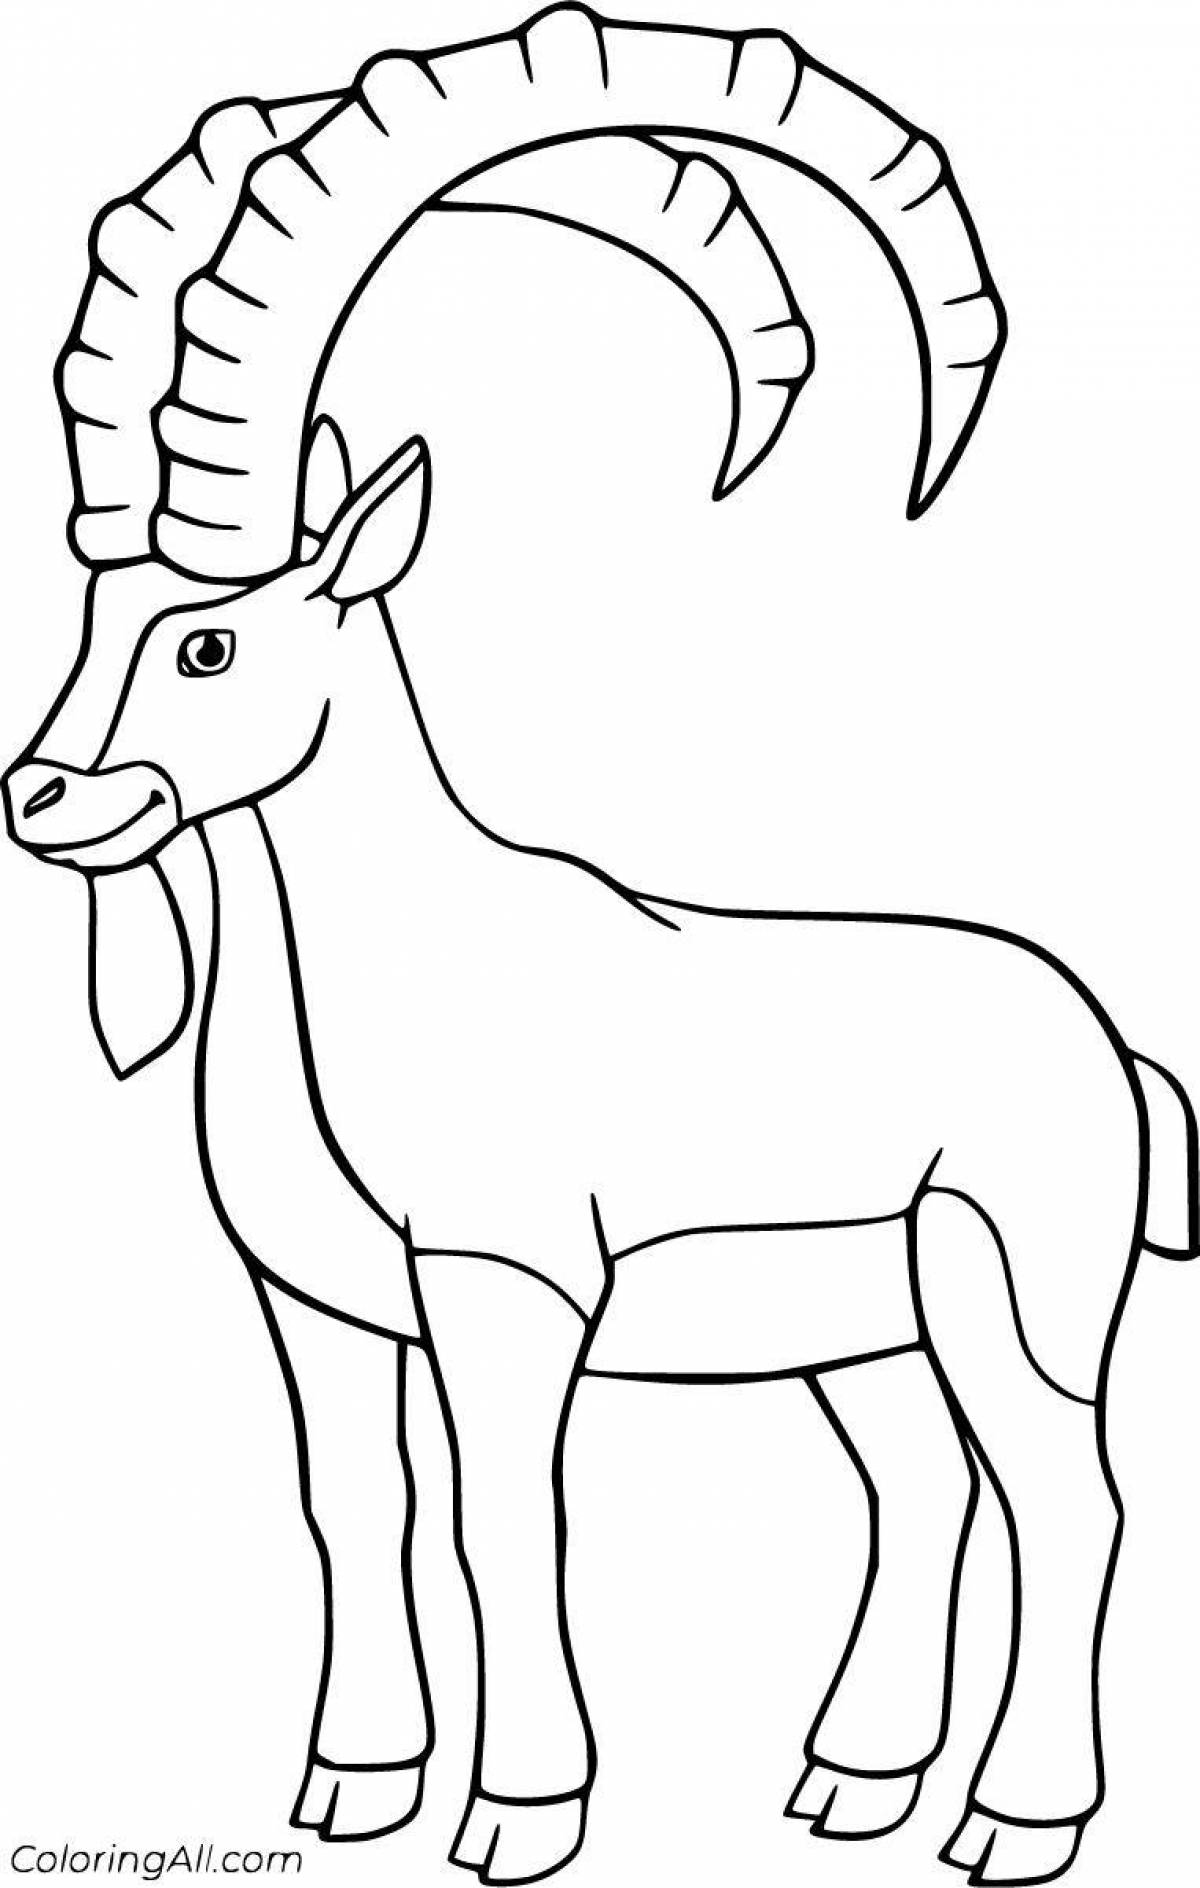 Rampant mountain goat coloring page